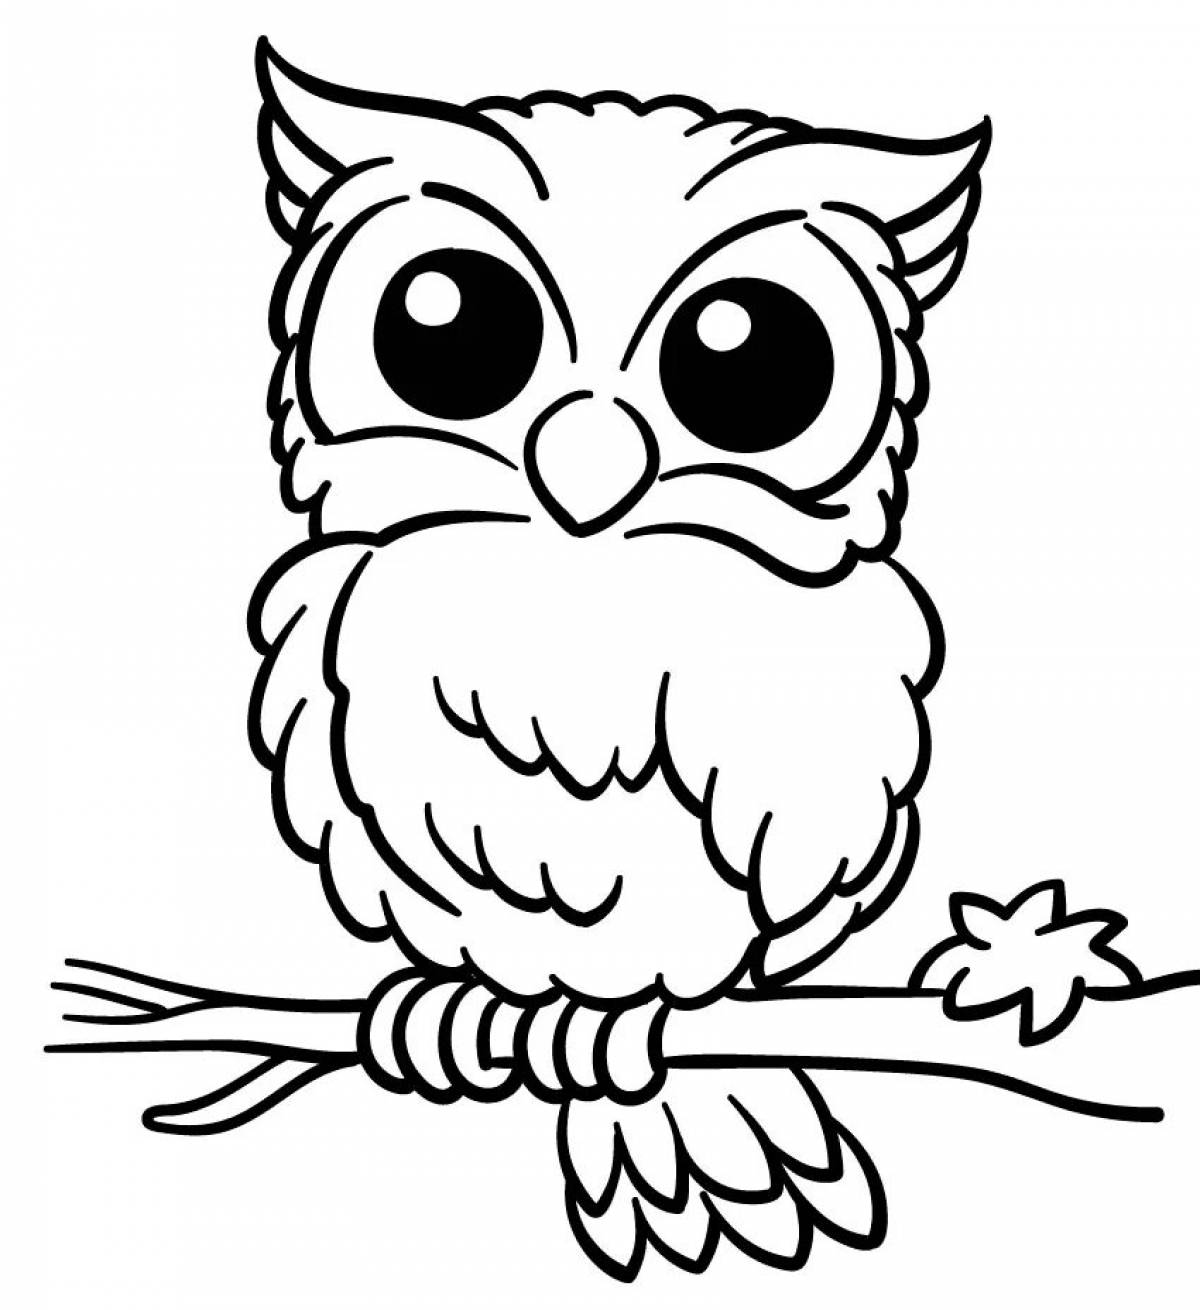 Zani owl coloring book for kids